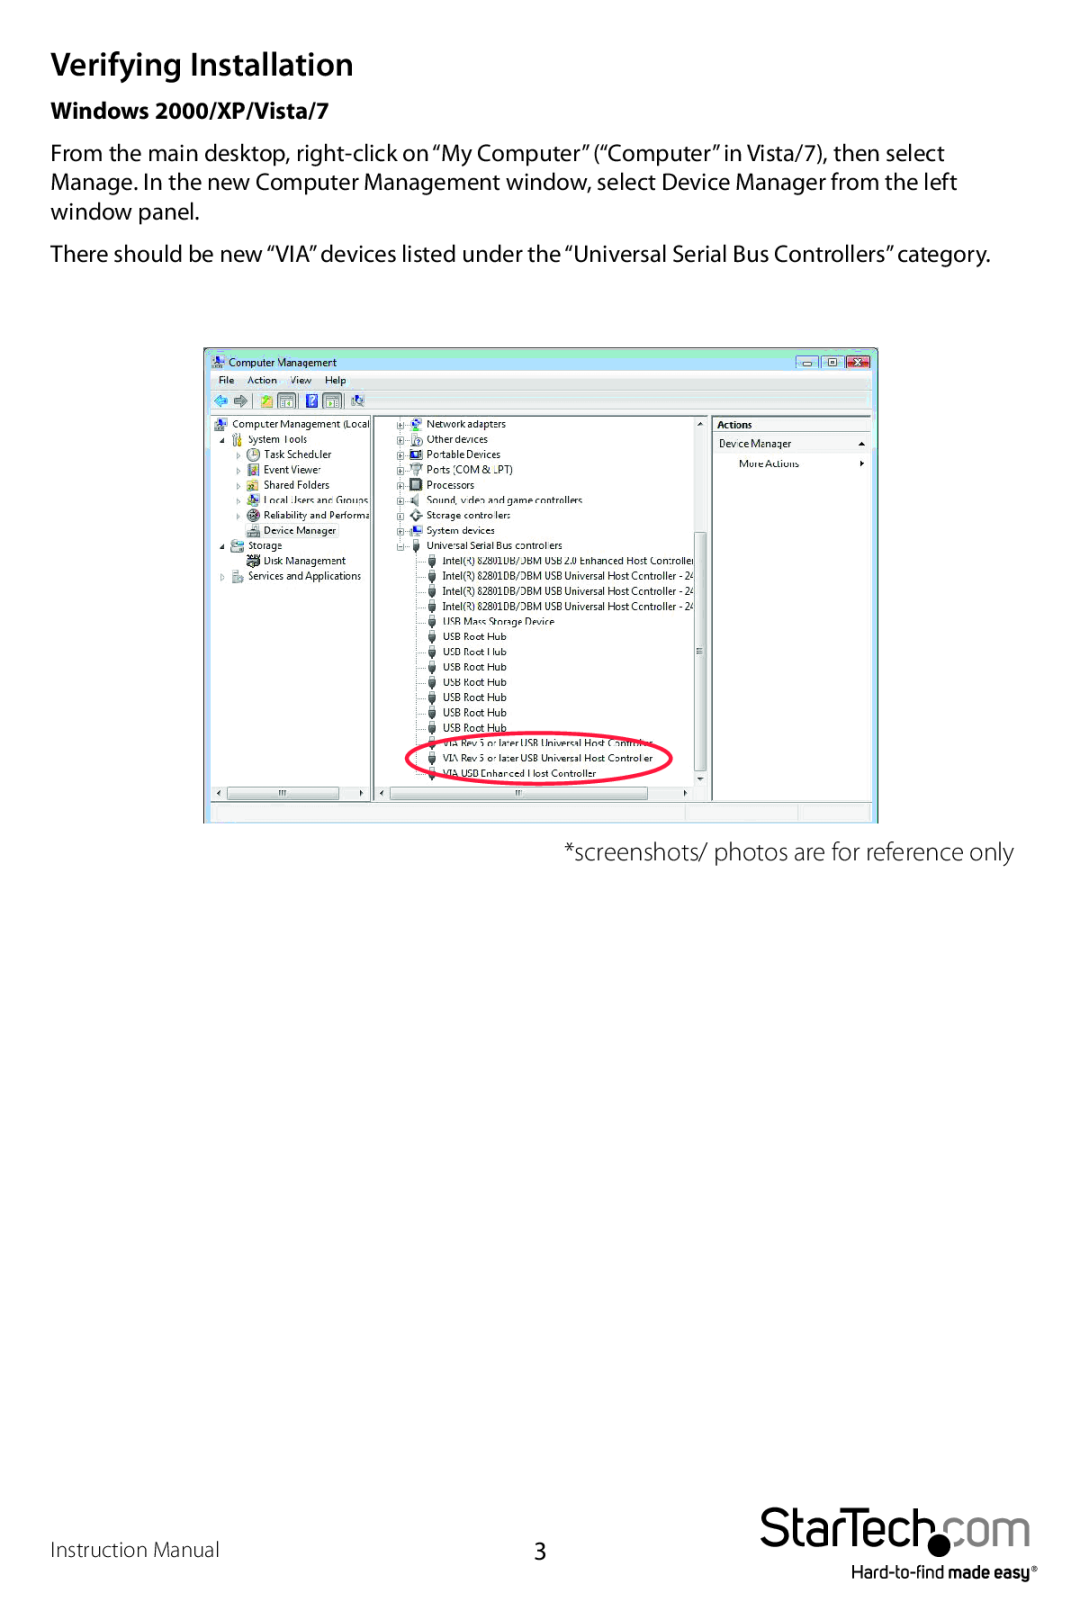 StarTech.com pciusb7 manual Verifying Installation, Windows 2000/XP/Vista/7 